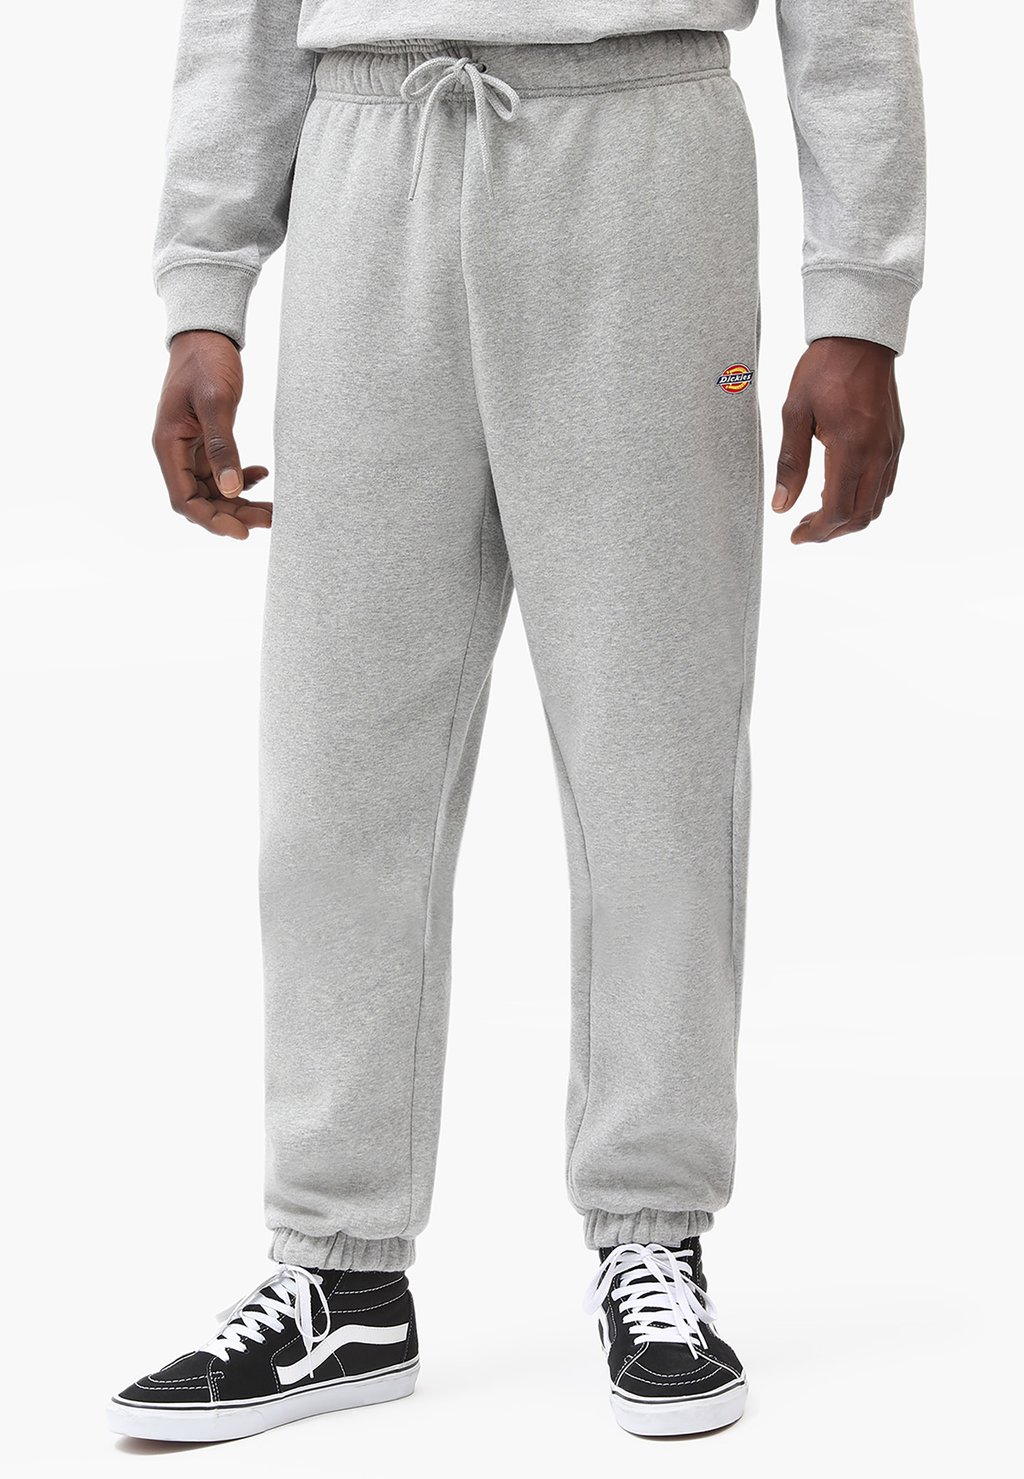 Спортивные брюки MAPLETON Dickies, серый меланж футболка базовая mapleton dickies серый меланж